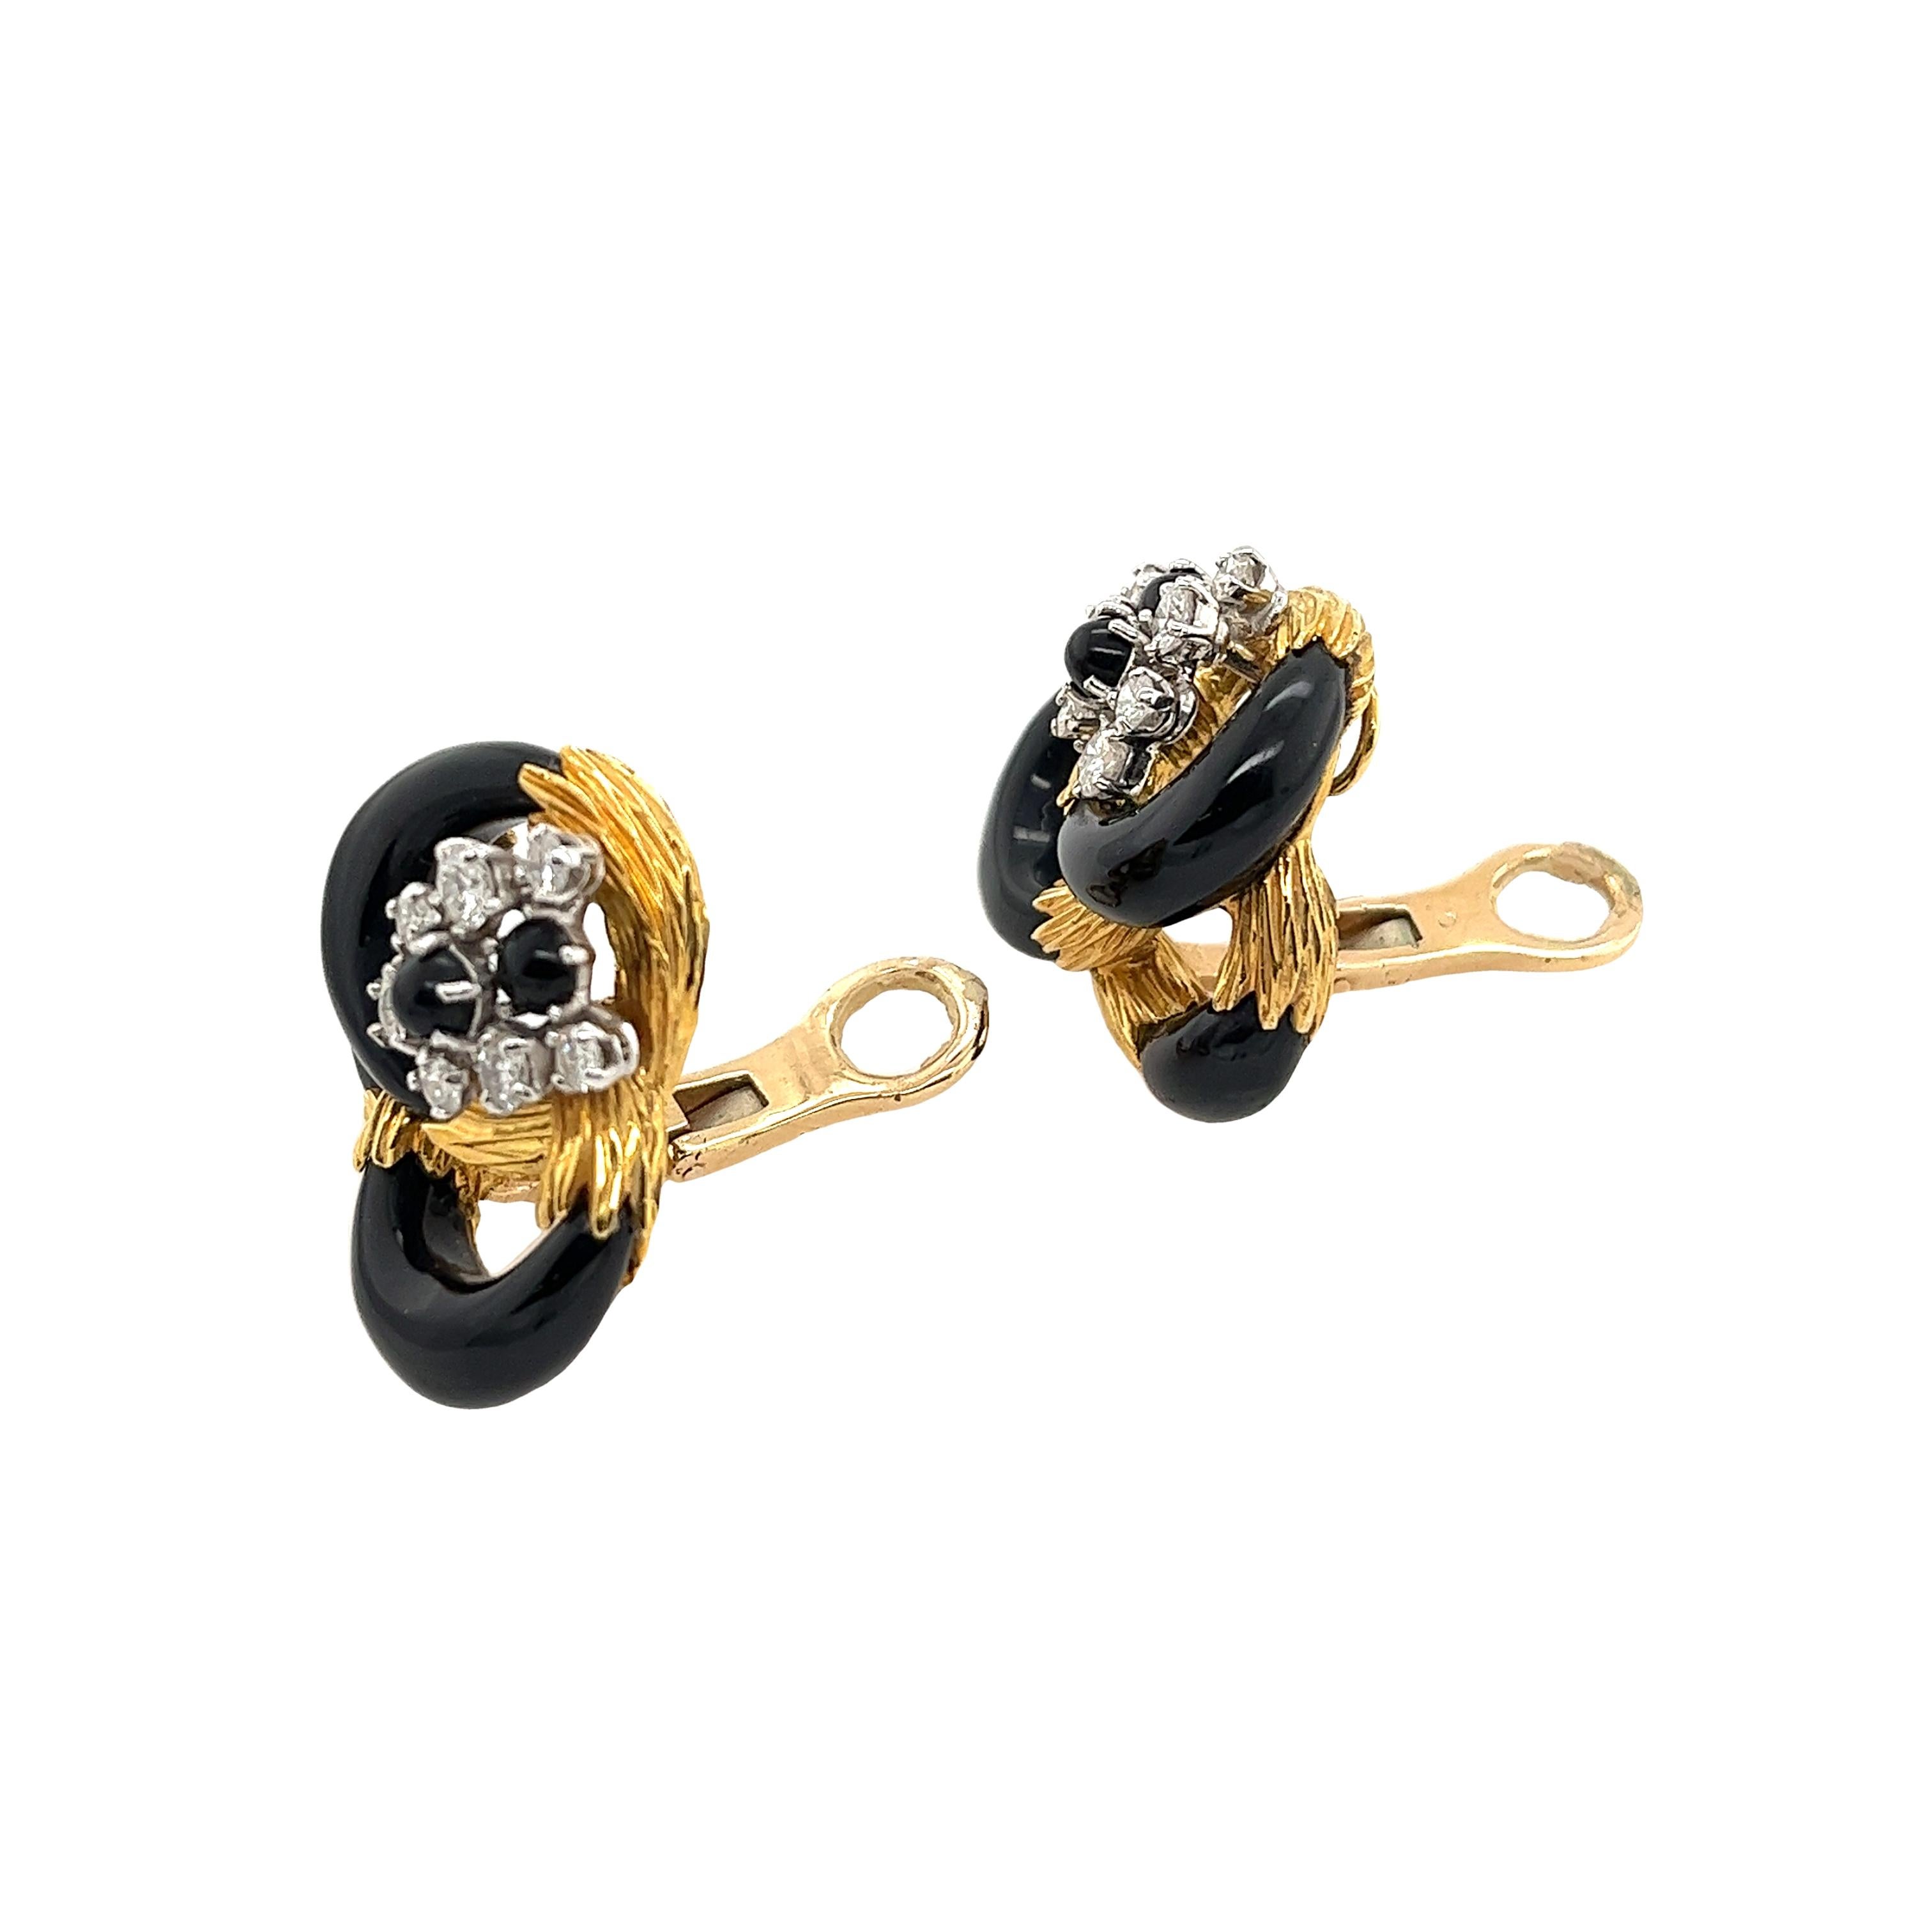 Kutchinsky Vintage Diamond Earrings Black Enamel Set In 18ct Yellow Gold 2